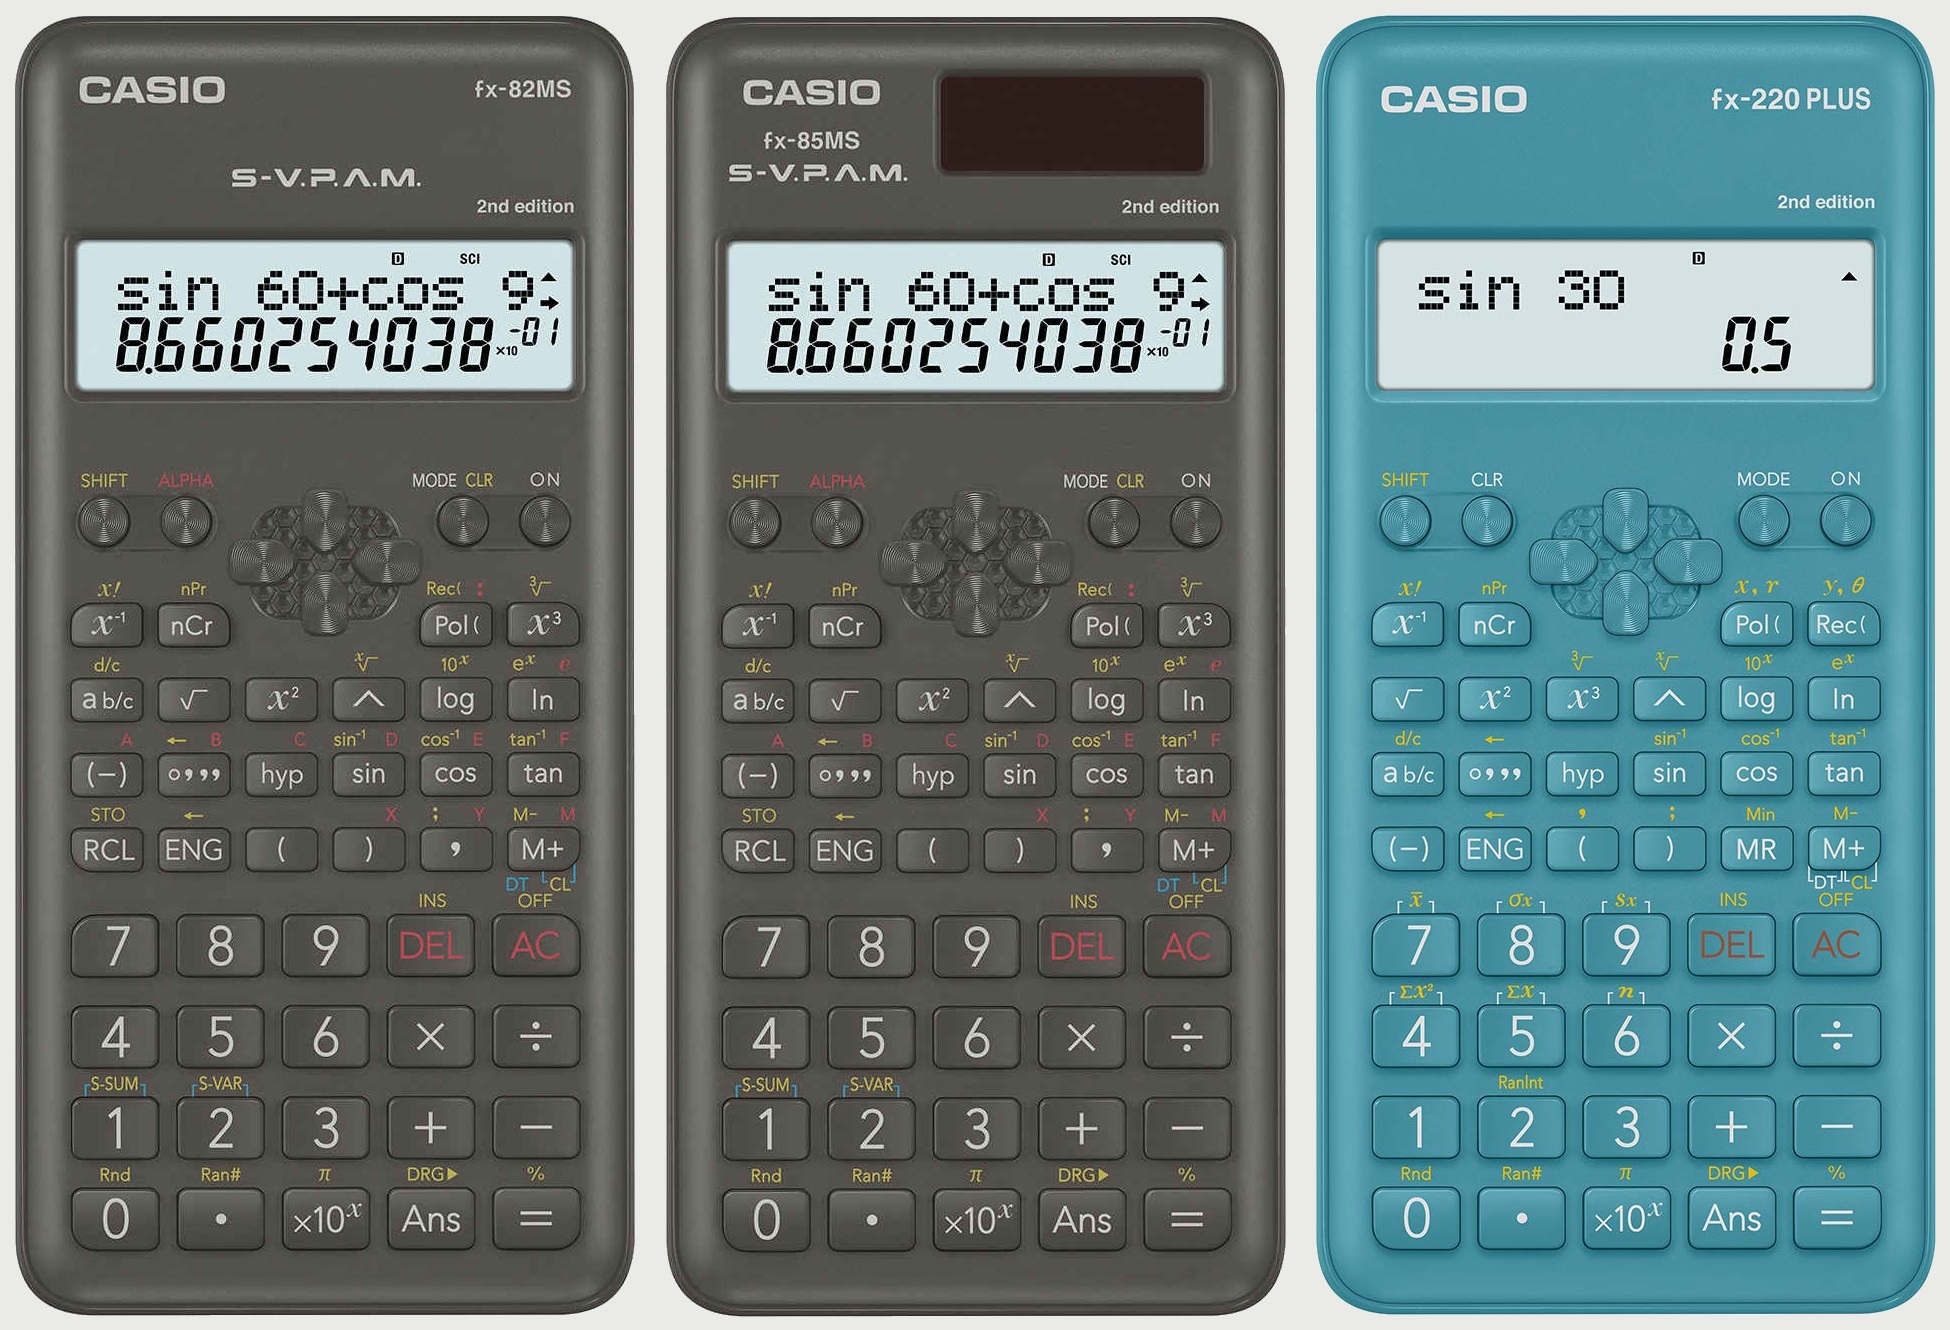 Tarabalam and chandrabalam calculator